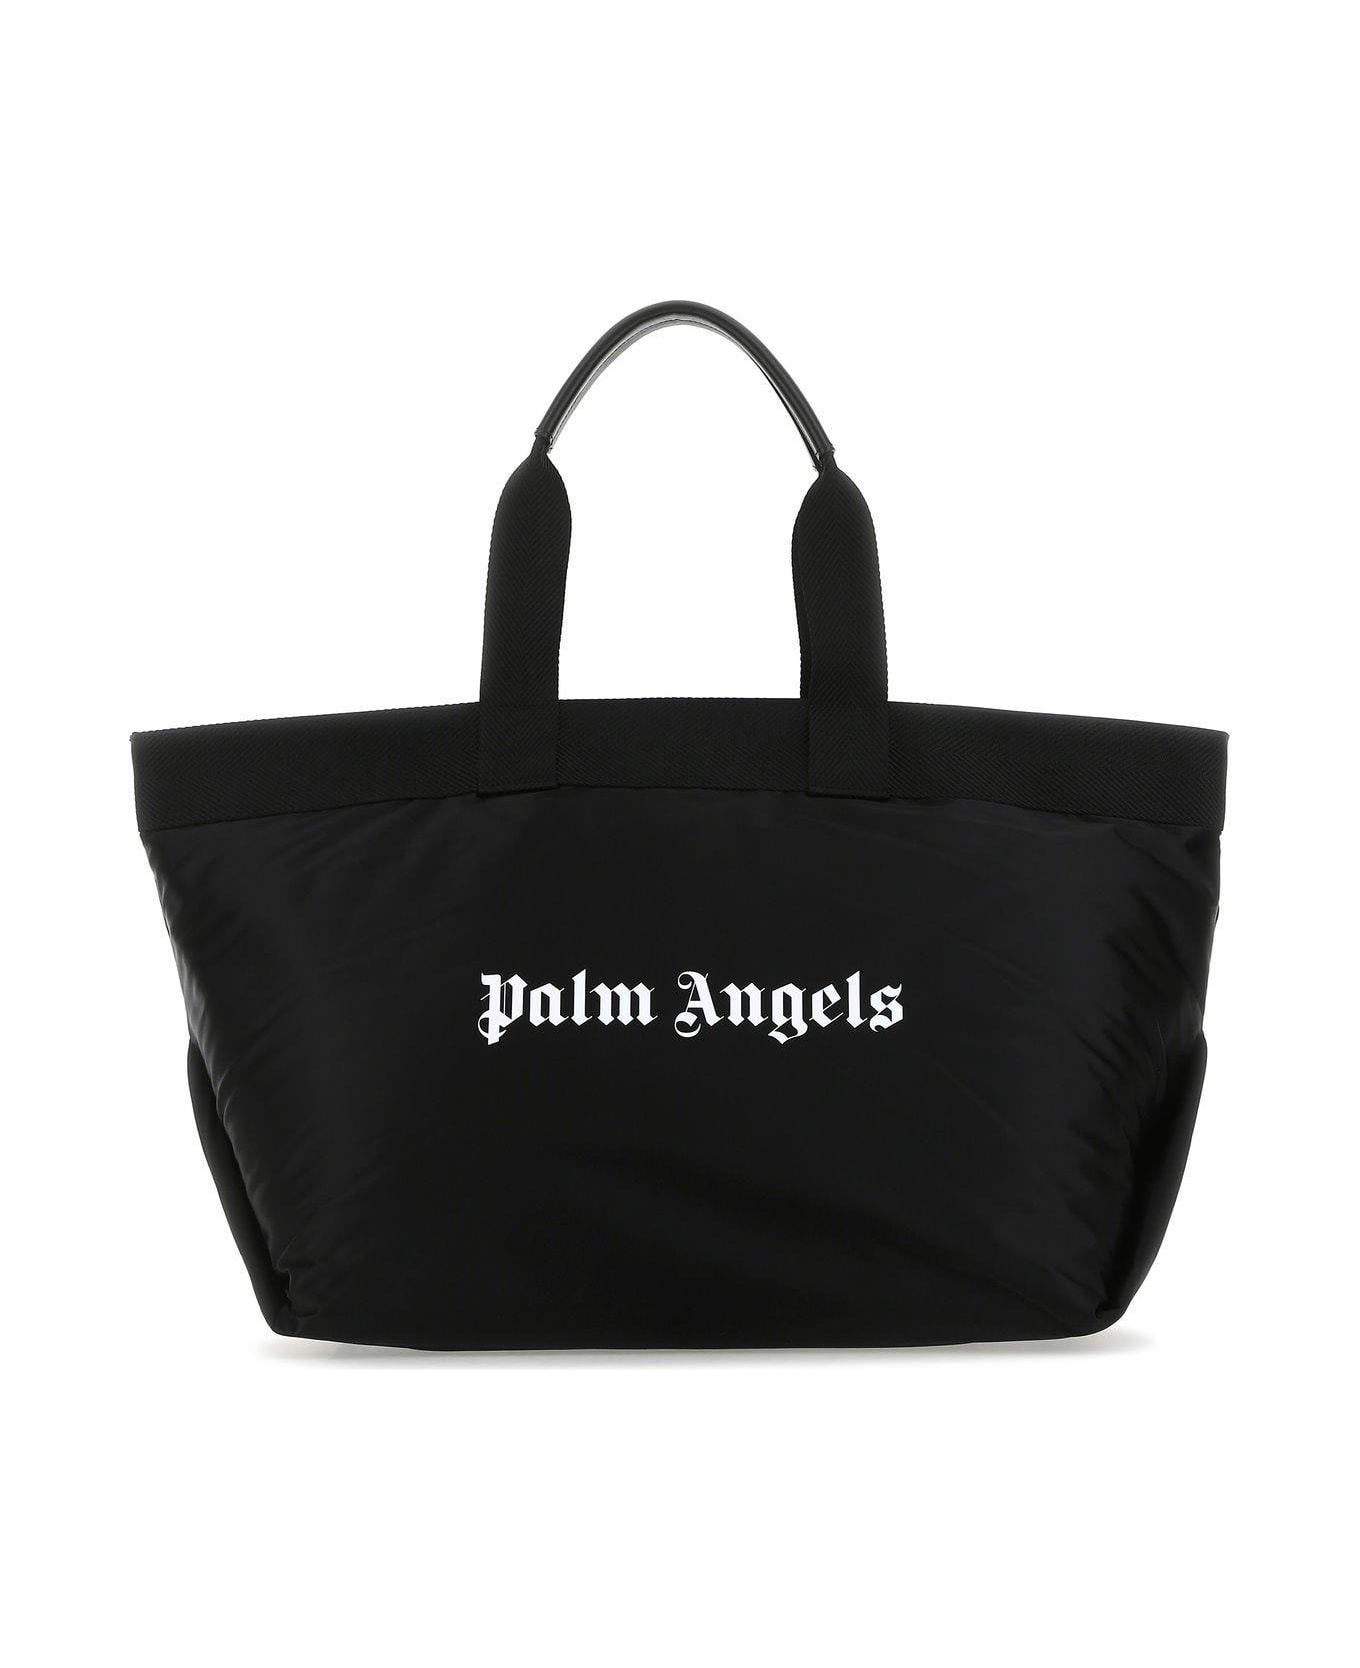 Palm Angels Black Fabric Shopping Bag - Nero/bianco トートバッグ